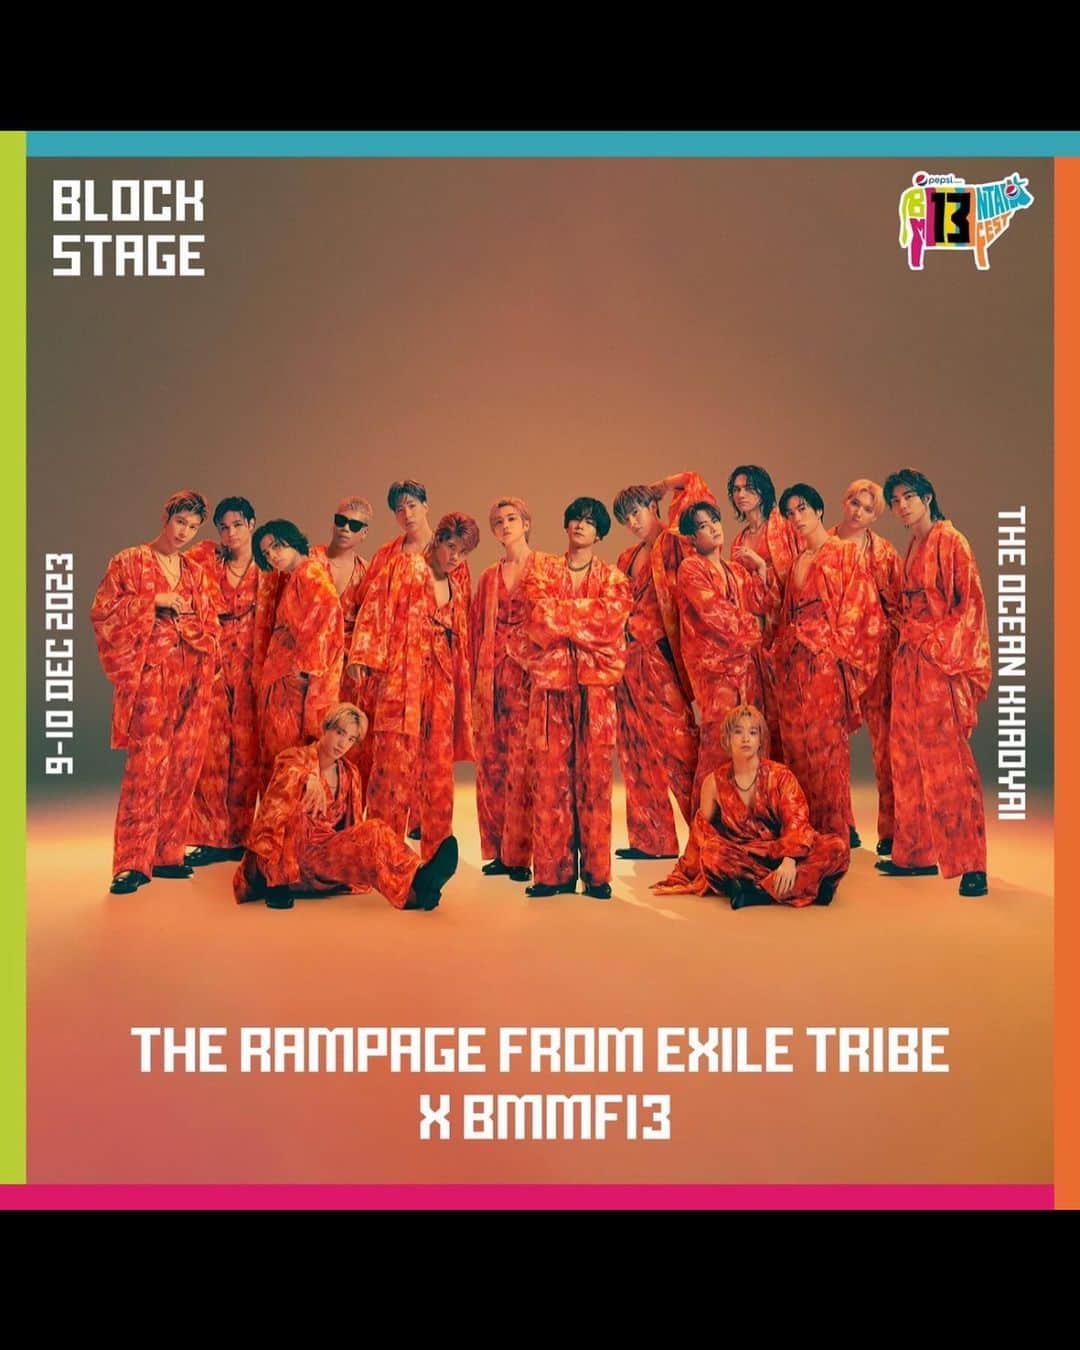 LIKIYAのインスタグラム：「BIG MOUNTAIN MUSIC FESTIVAL🇹🇭 @bigmountainmusicfestival   We’re going to perform at the BLOCK STAGE tonight 8:10pm🔥  Don’t miss it👍  #therampage #bigmountainmusicfestival  #bmmf13」